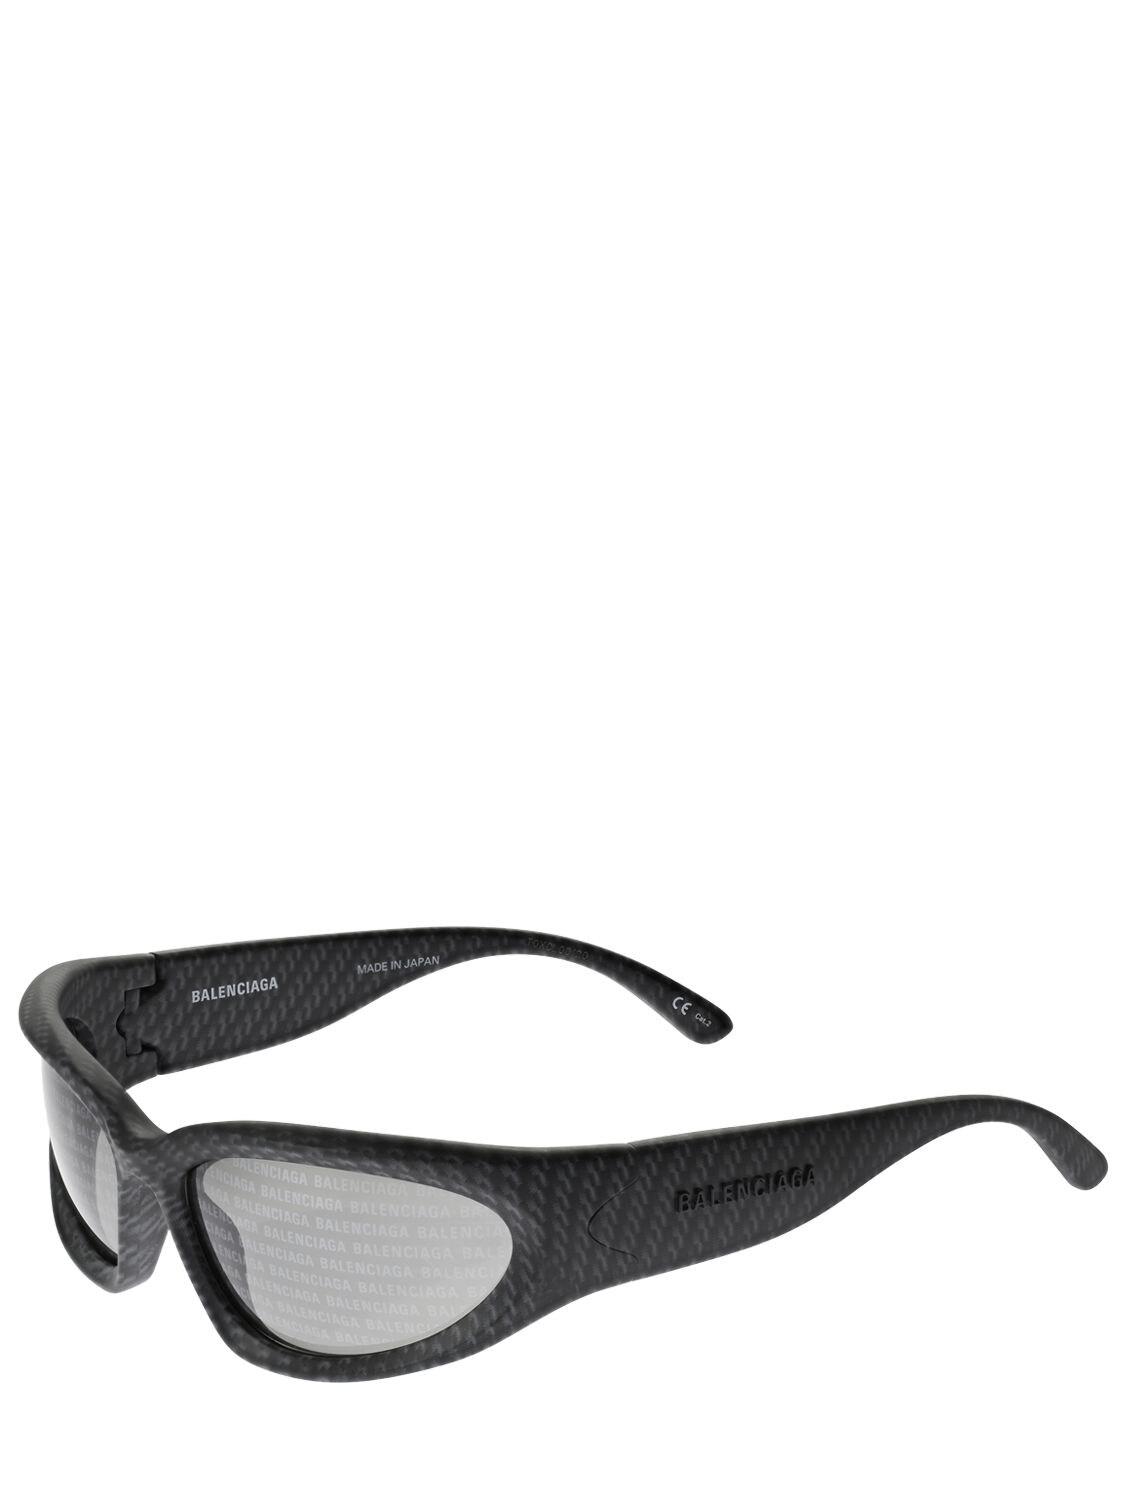 Balenciaga Swift Oval 0157s Monogram Sunglasses in Metallic | Lyst